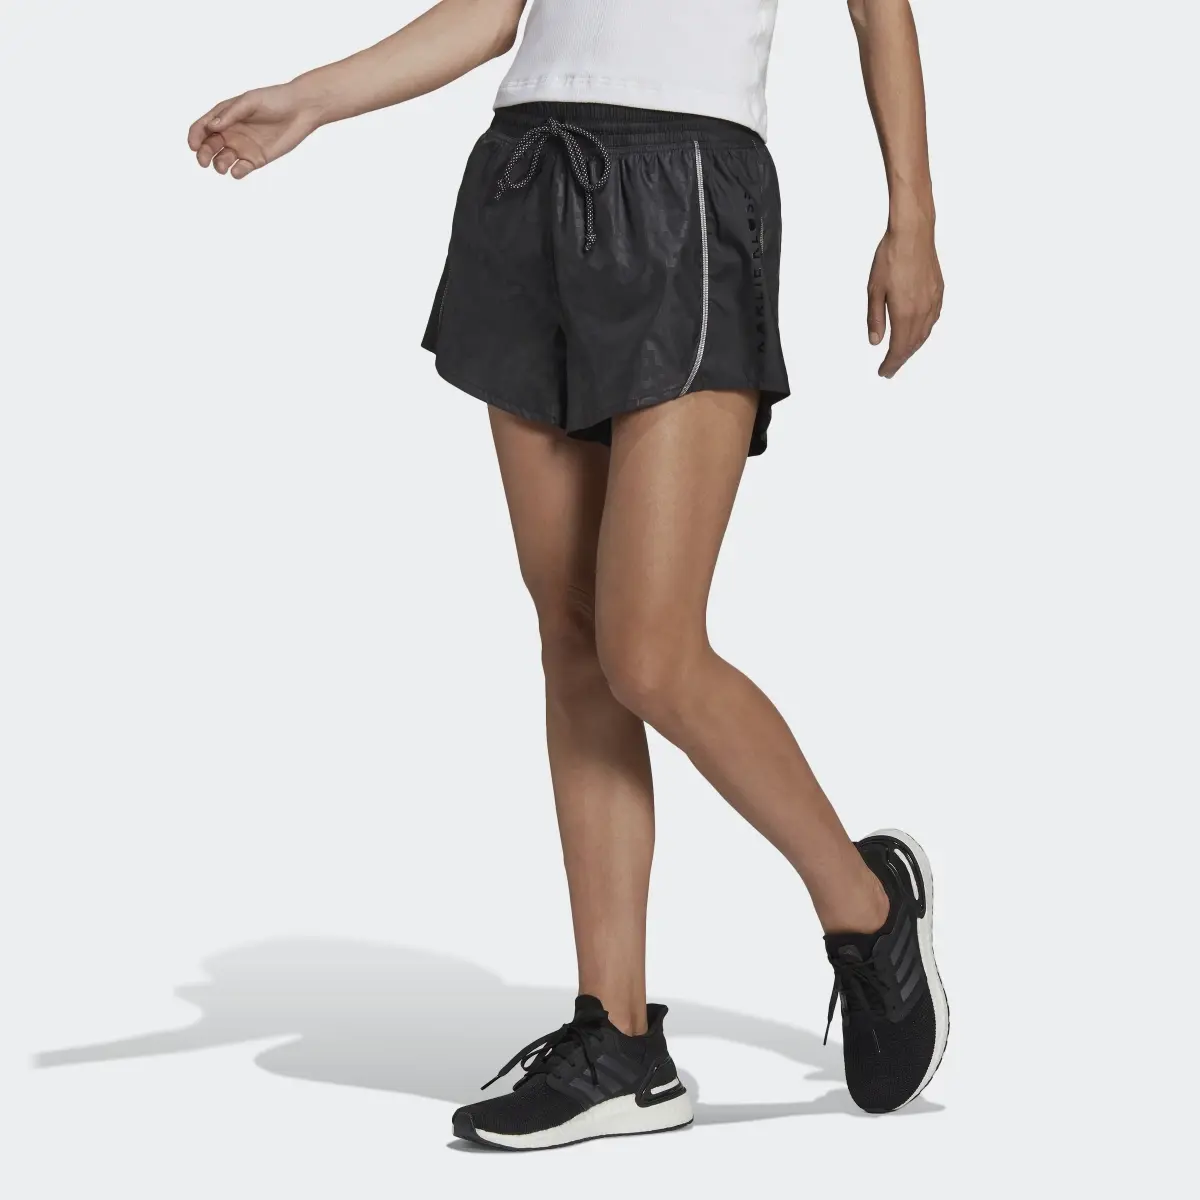 Adidas Calções de Running Karlie Kloss x adidas. 1